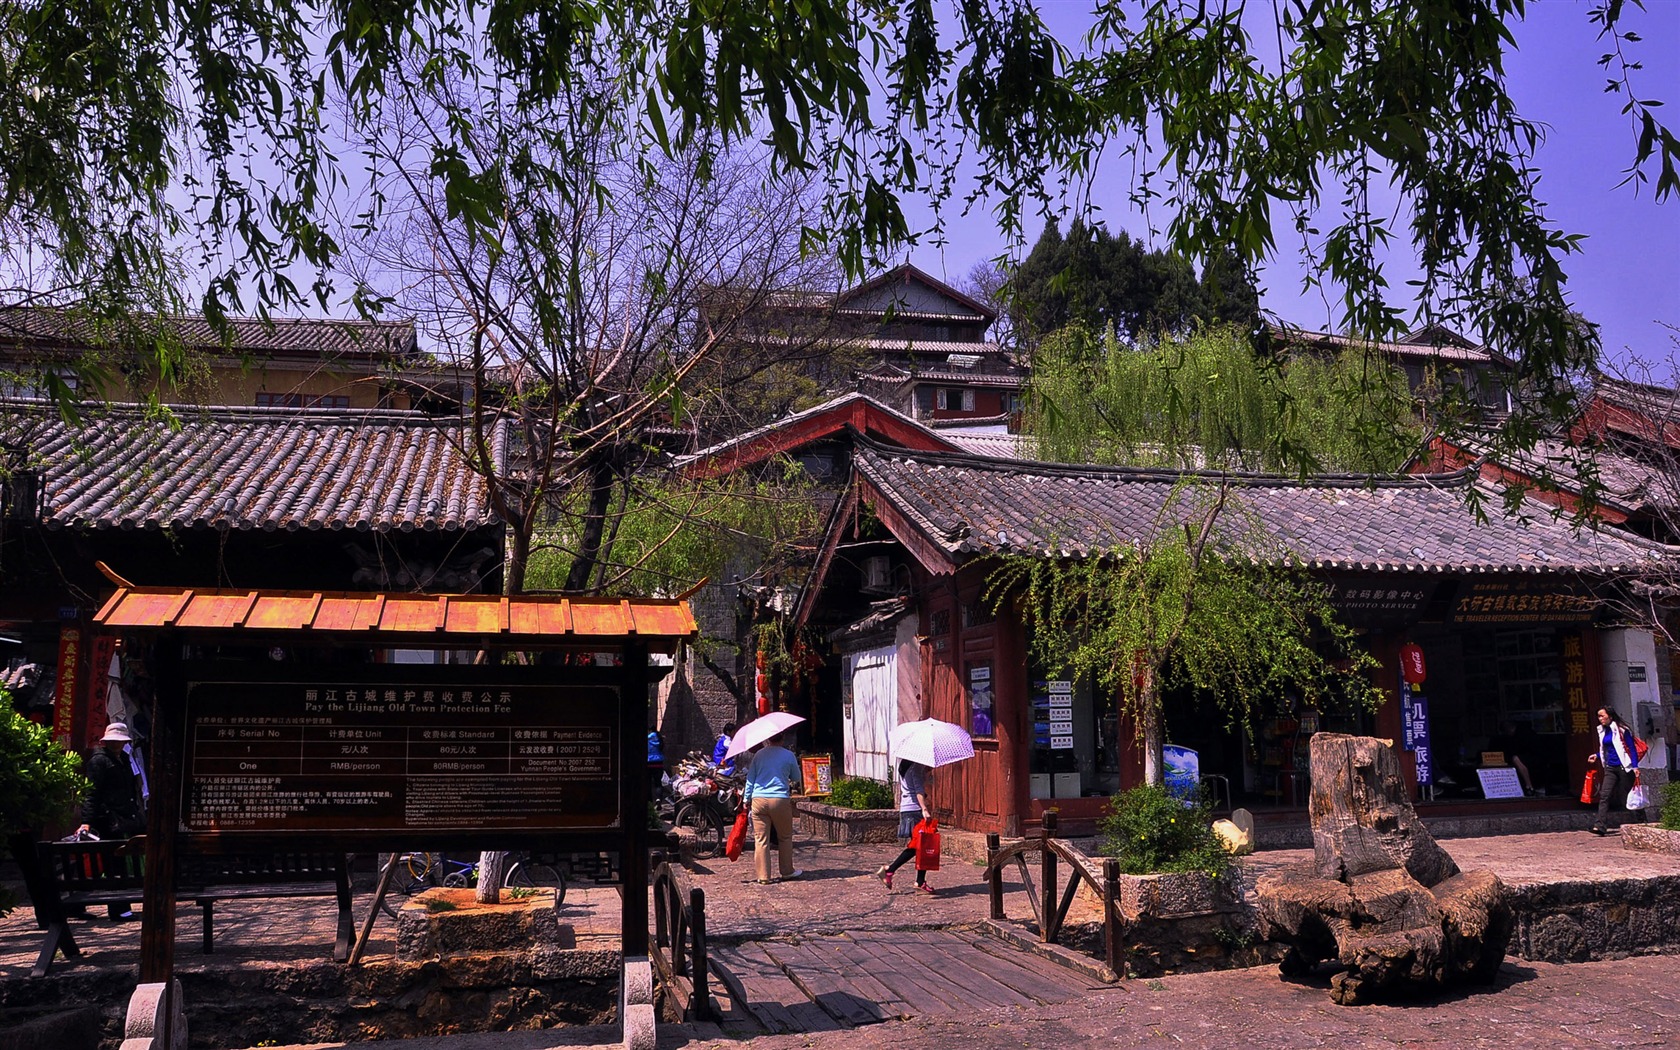 Lijiang ancient town atmosphere (2) (old Hong OK works) #26 - 1680x1050